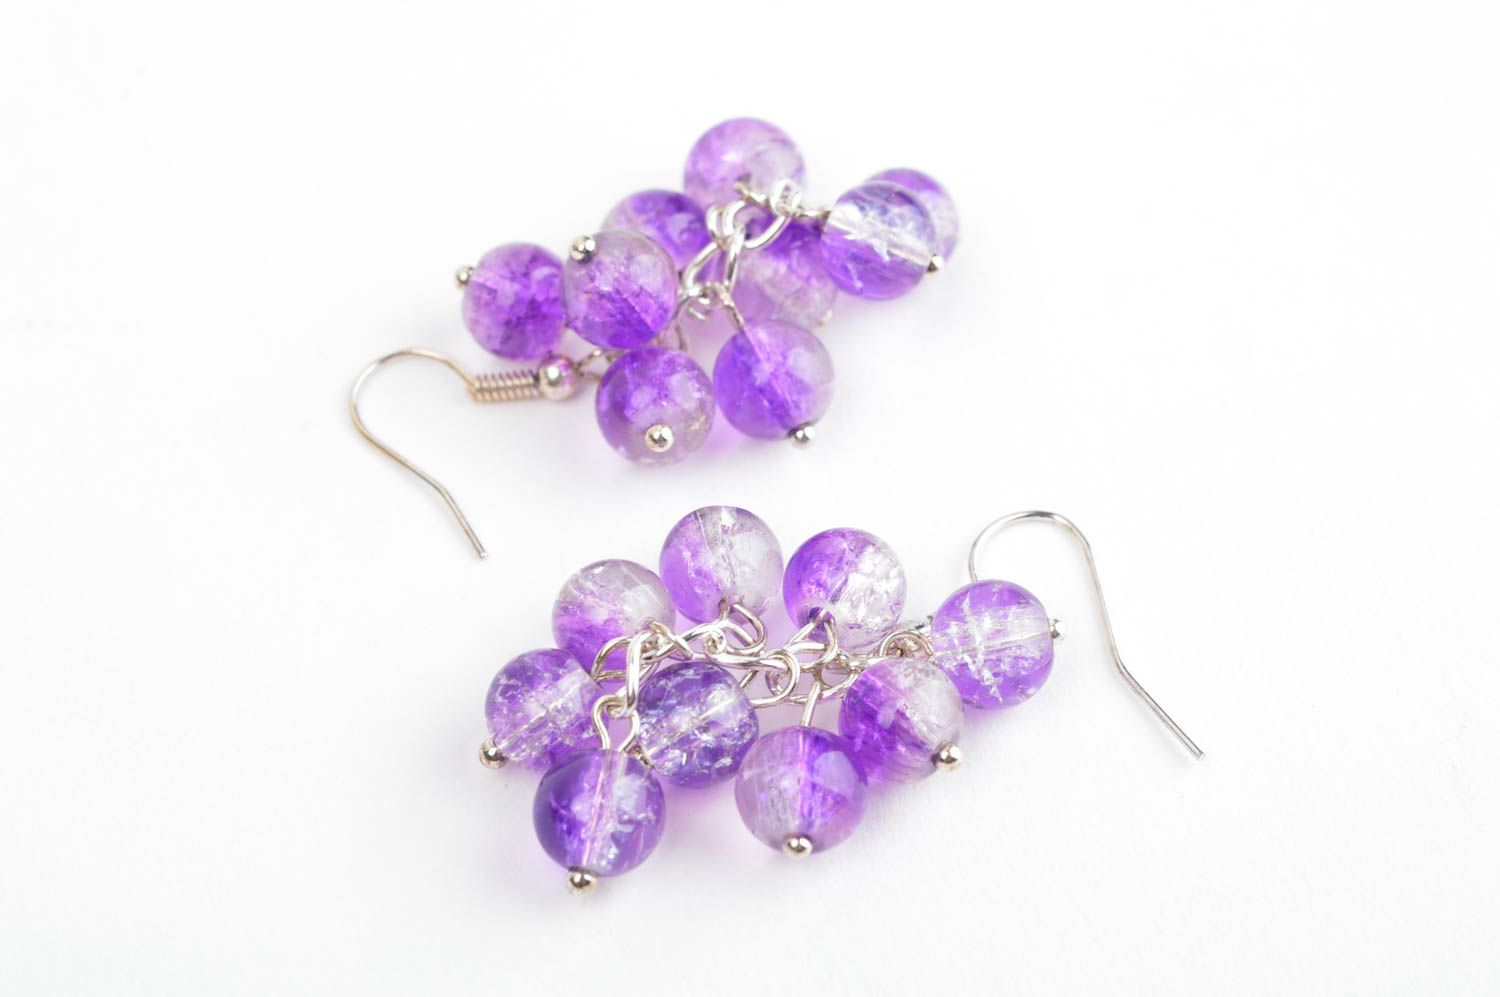 Handmade earrings designer accessory gift ideas unusual jewelry beads earrings photo 3